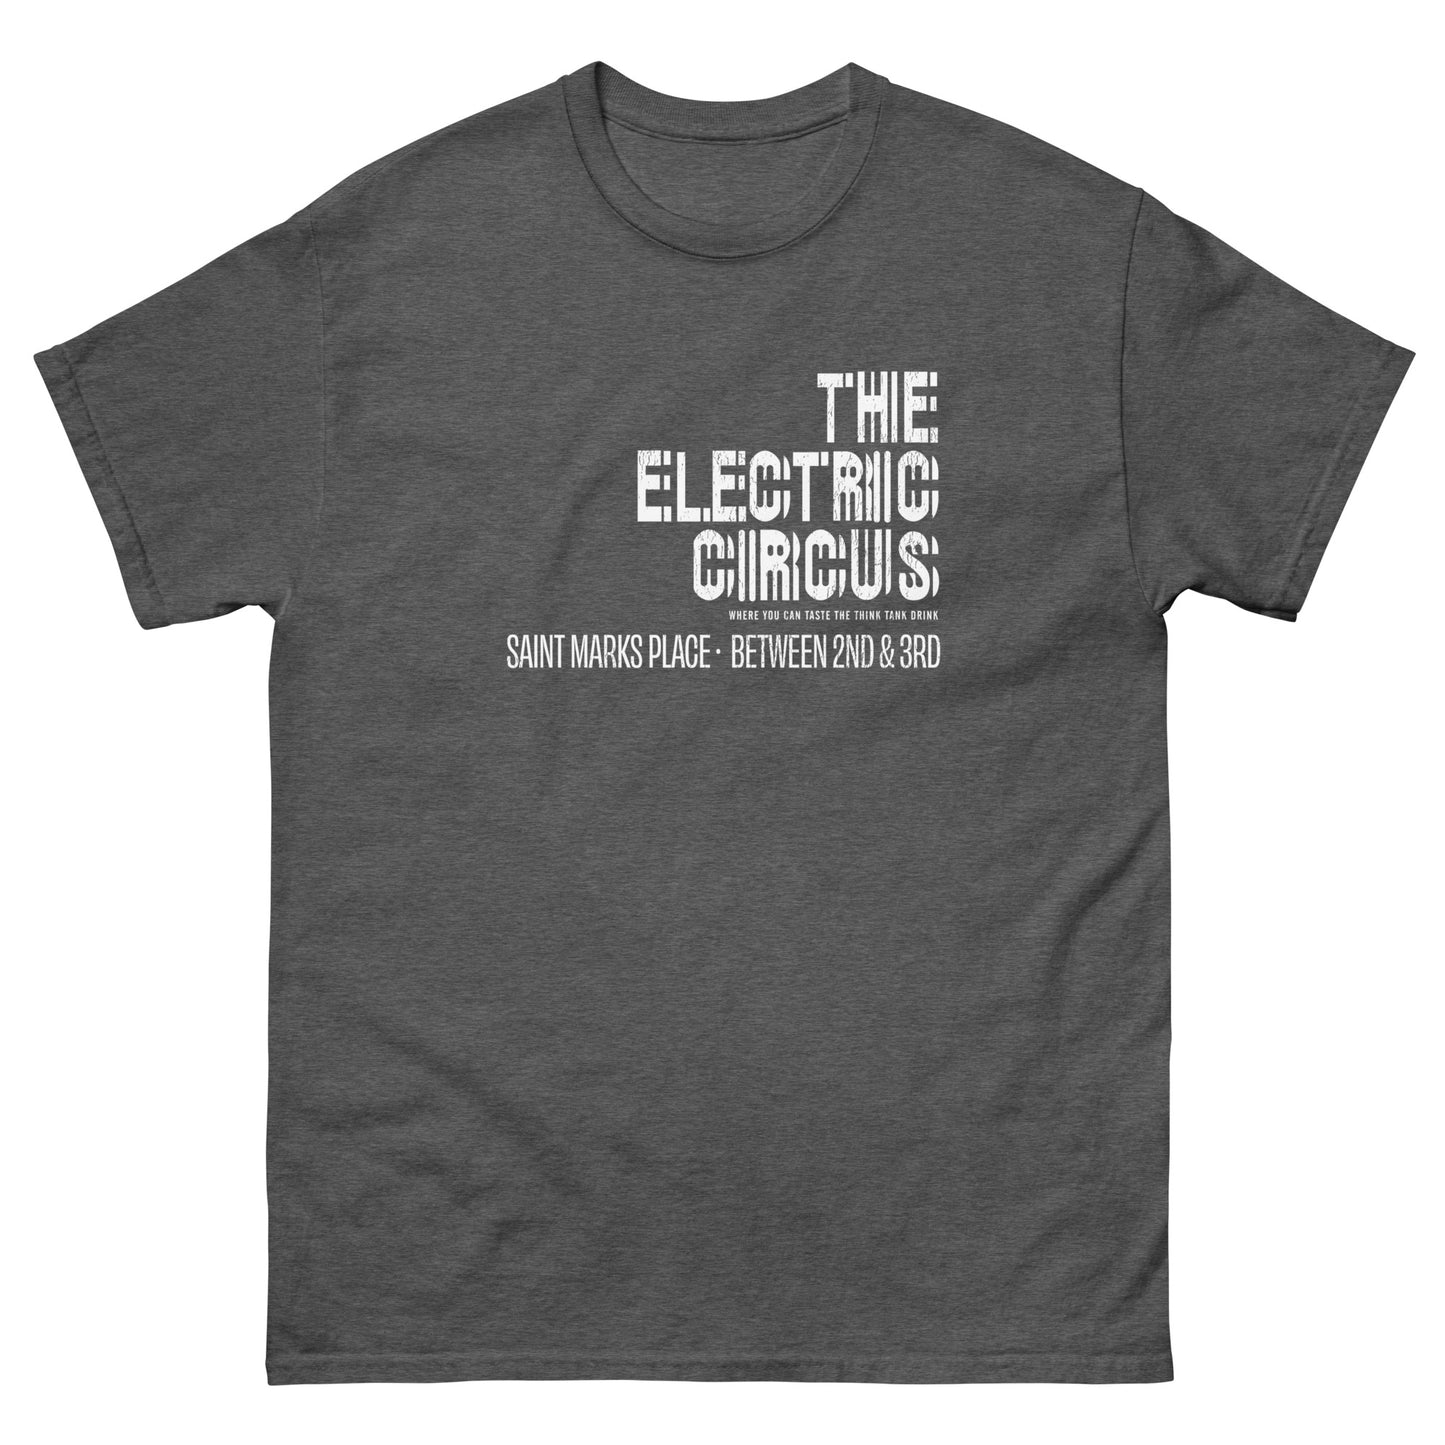 The Electric Circus Standard T-Shirt - Standard